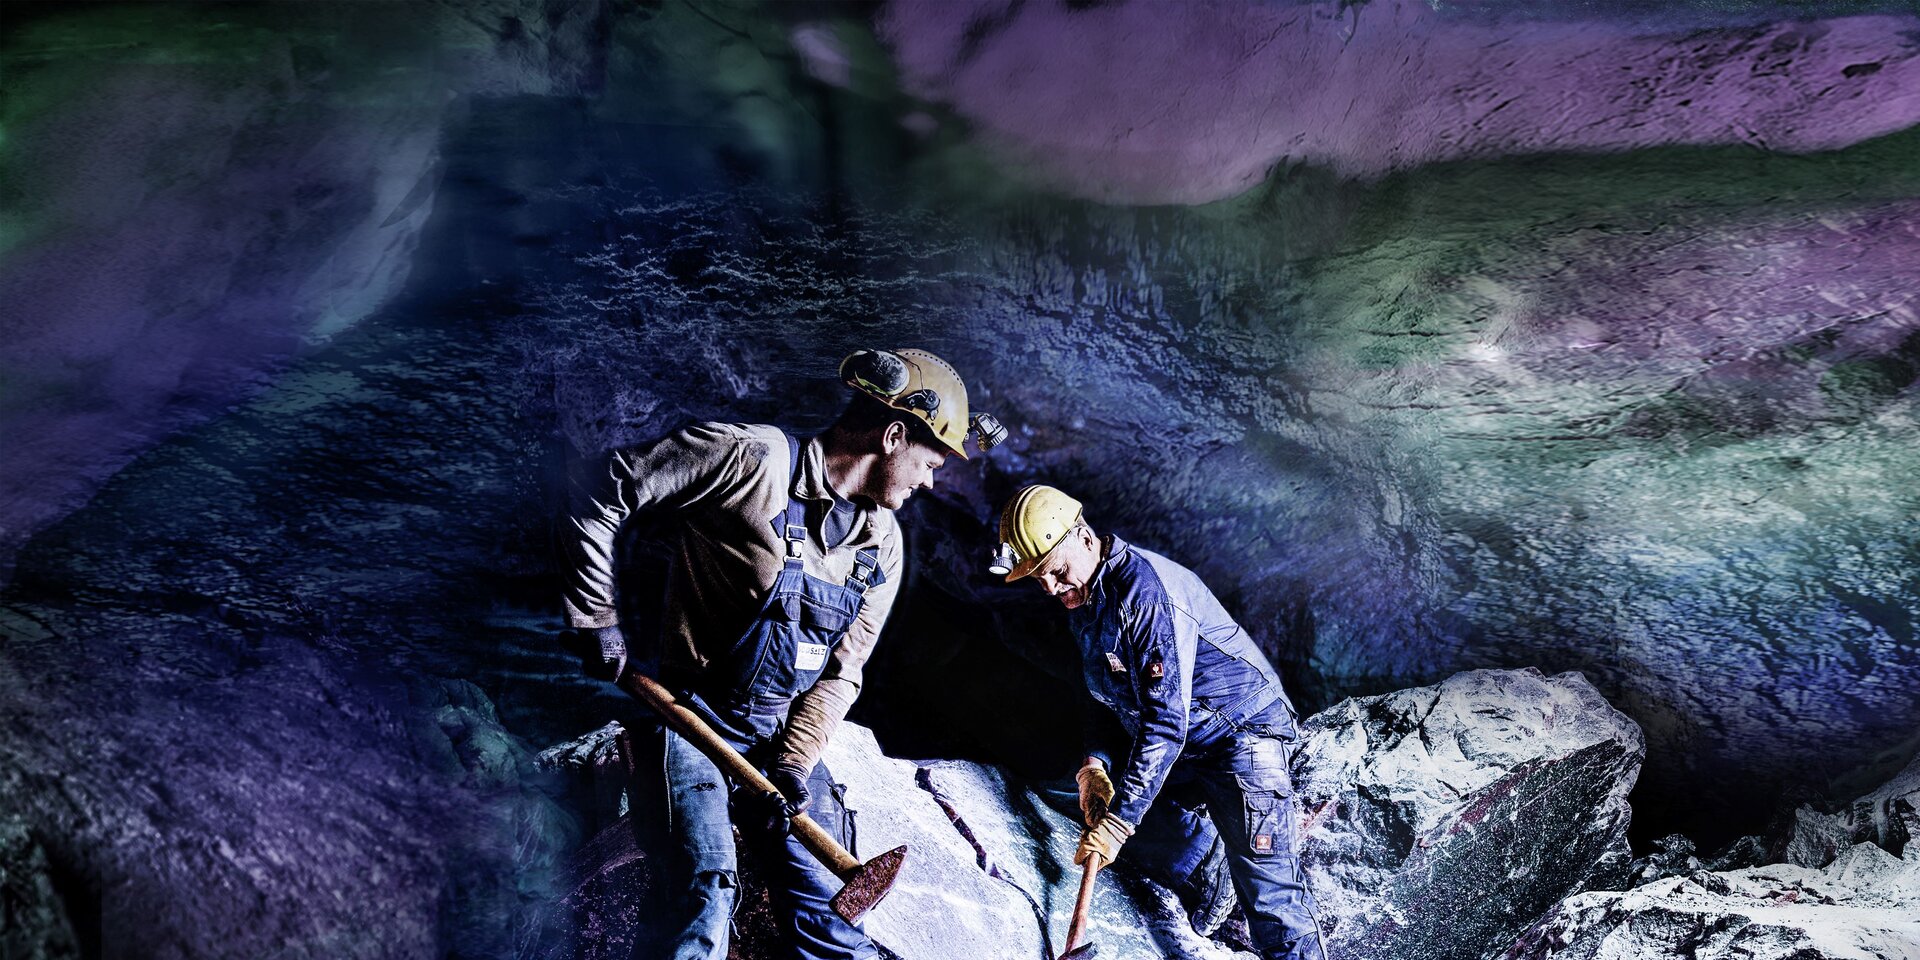 Miners mining salt underground